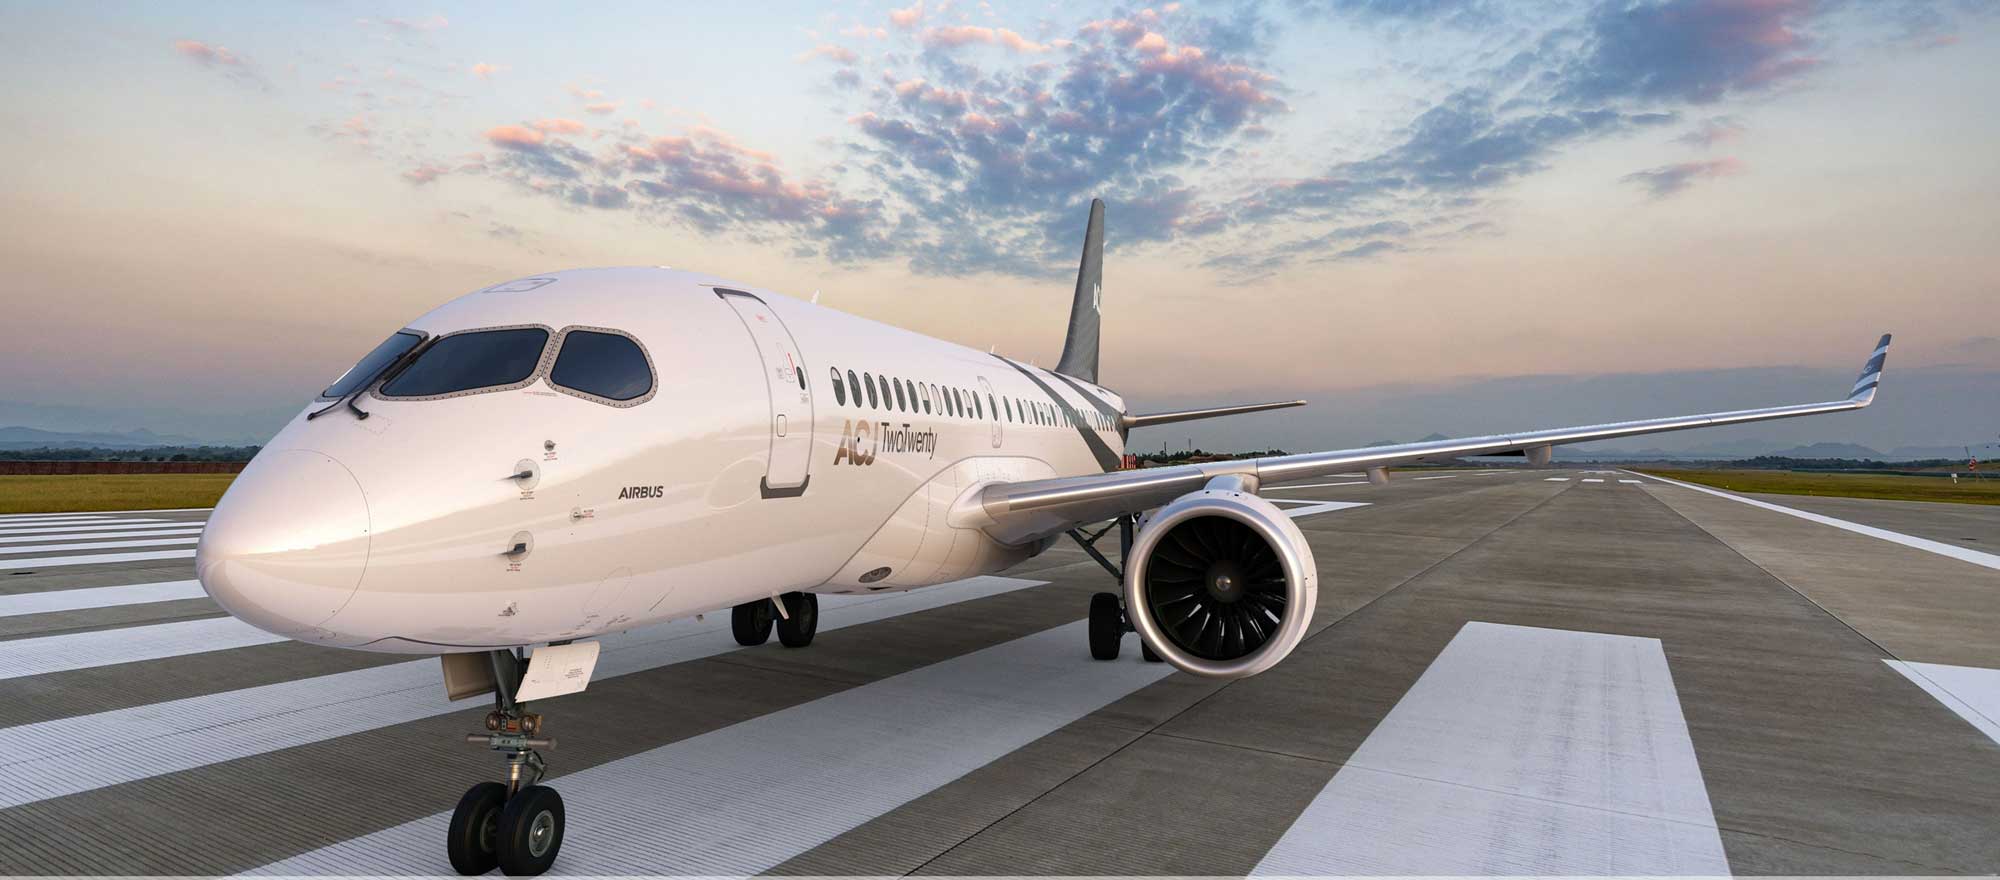 Major Business Aircraft Manufacturers At A Glance | Business Jet Traveler